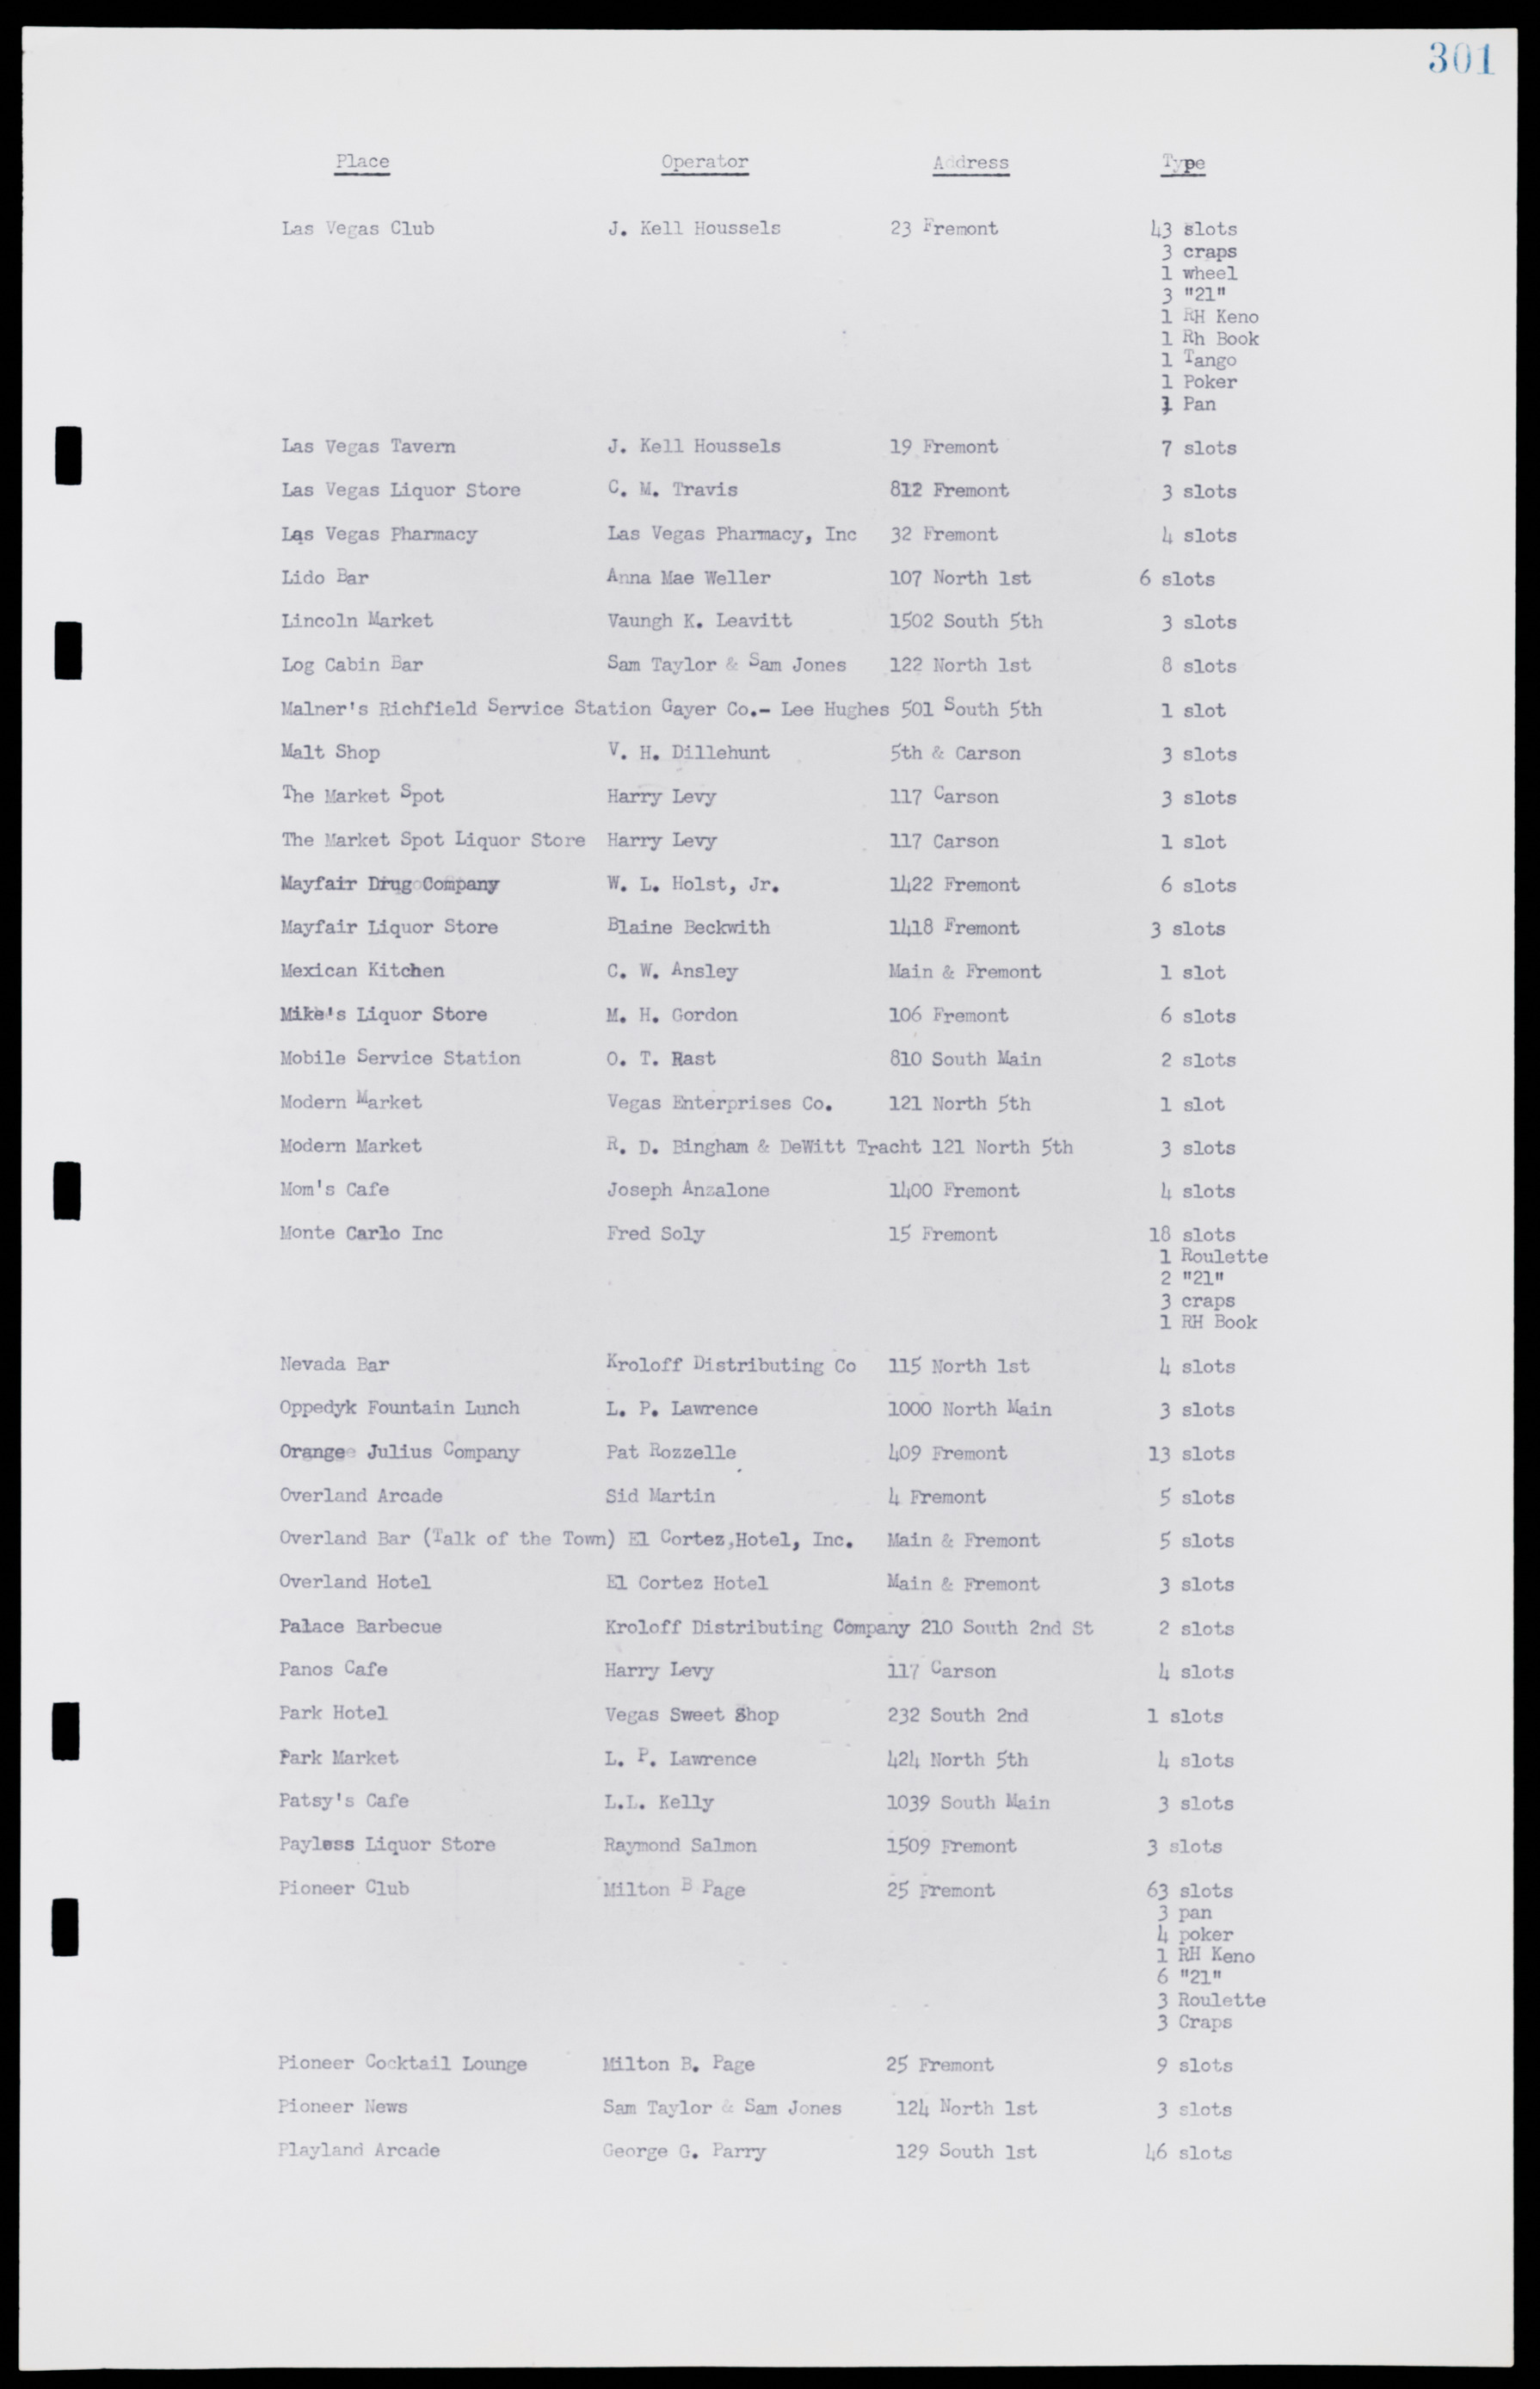 Las Vegas City Commission Minutes, January 7, 1947 to October 26, 1949, lvc000006-325